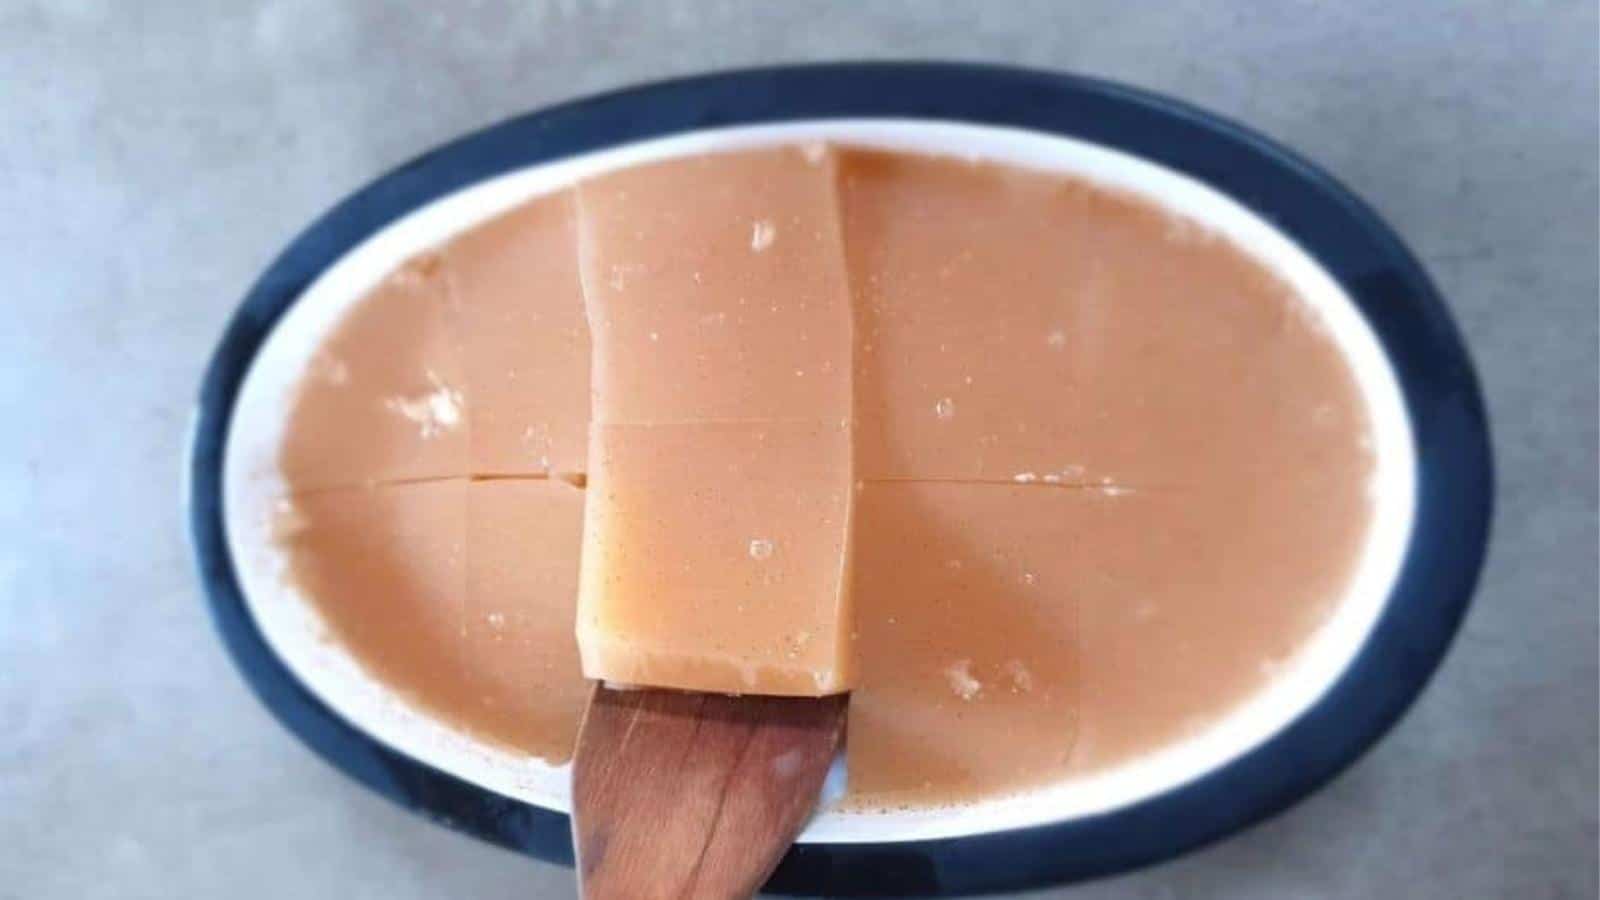 Sugar-free gelatin in an oval bowl cut with wooden spatula.